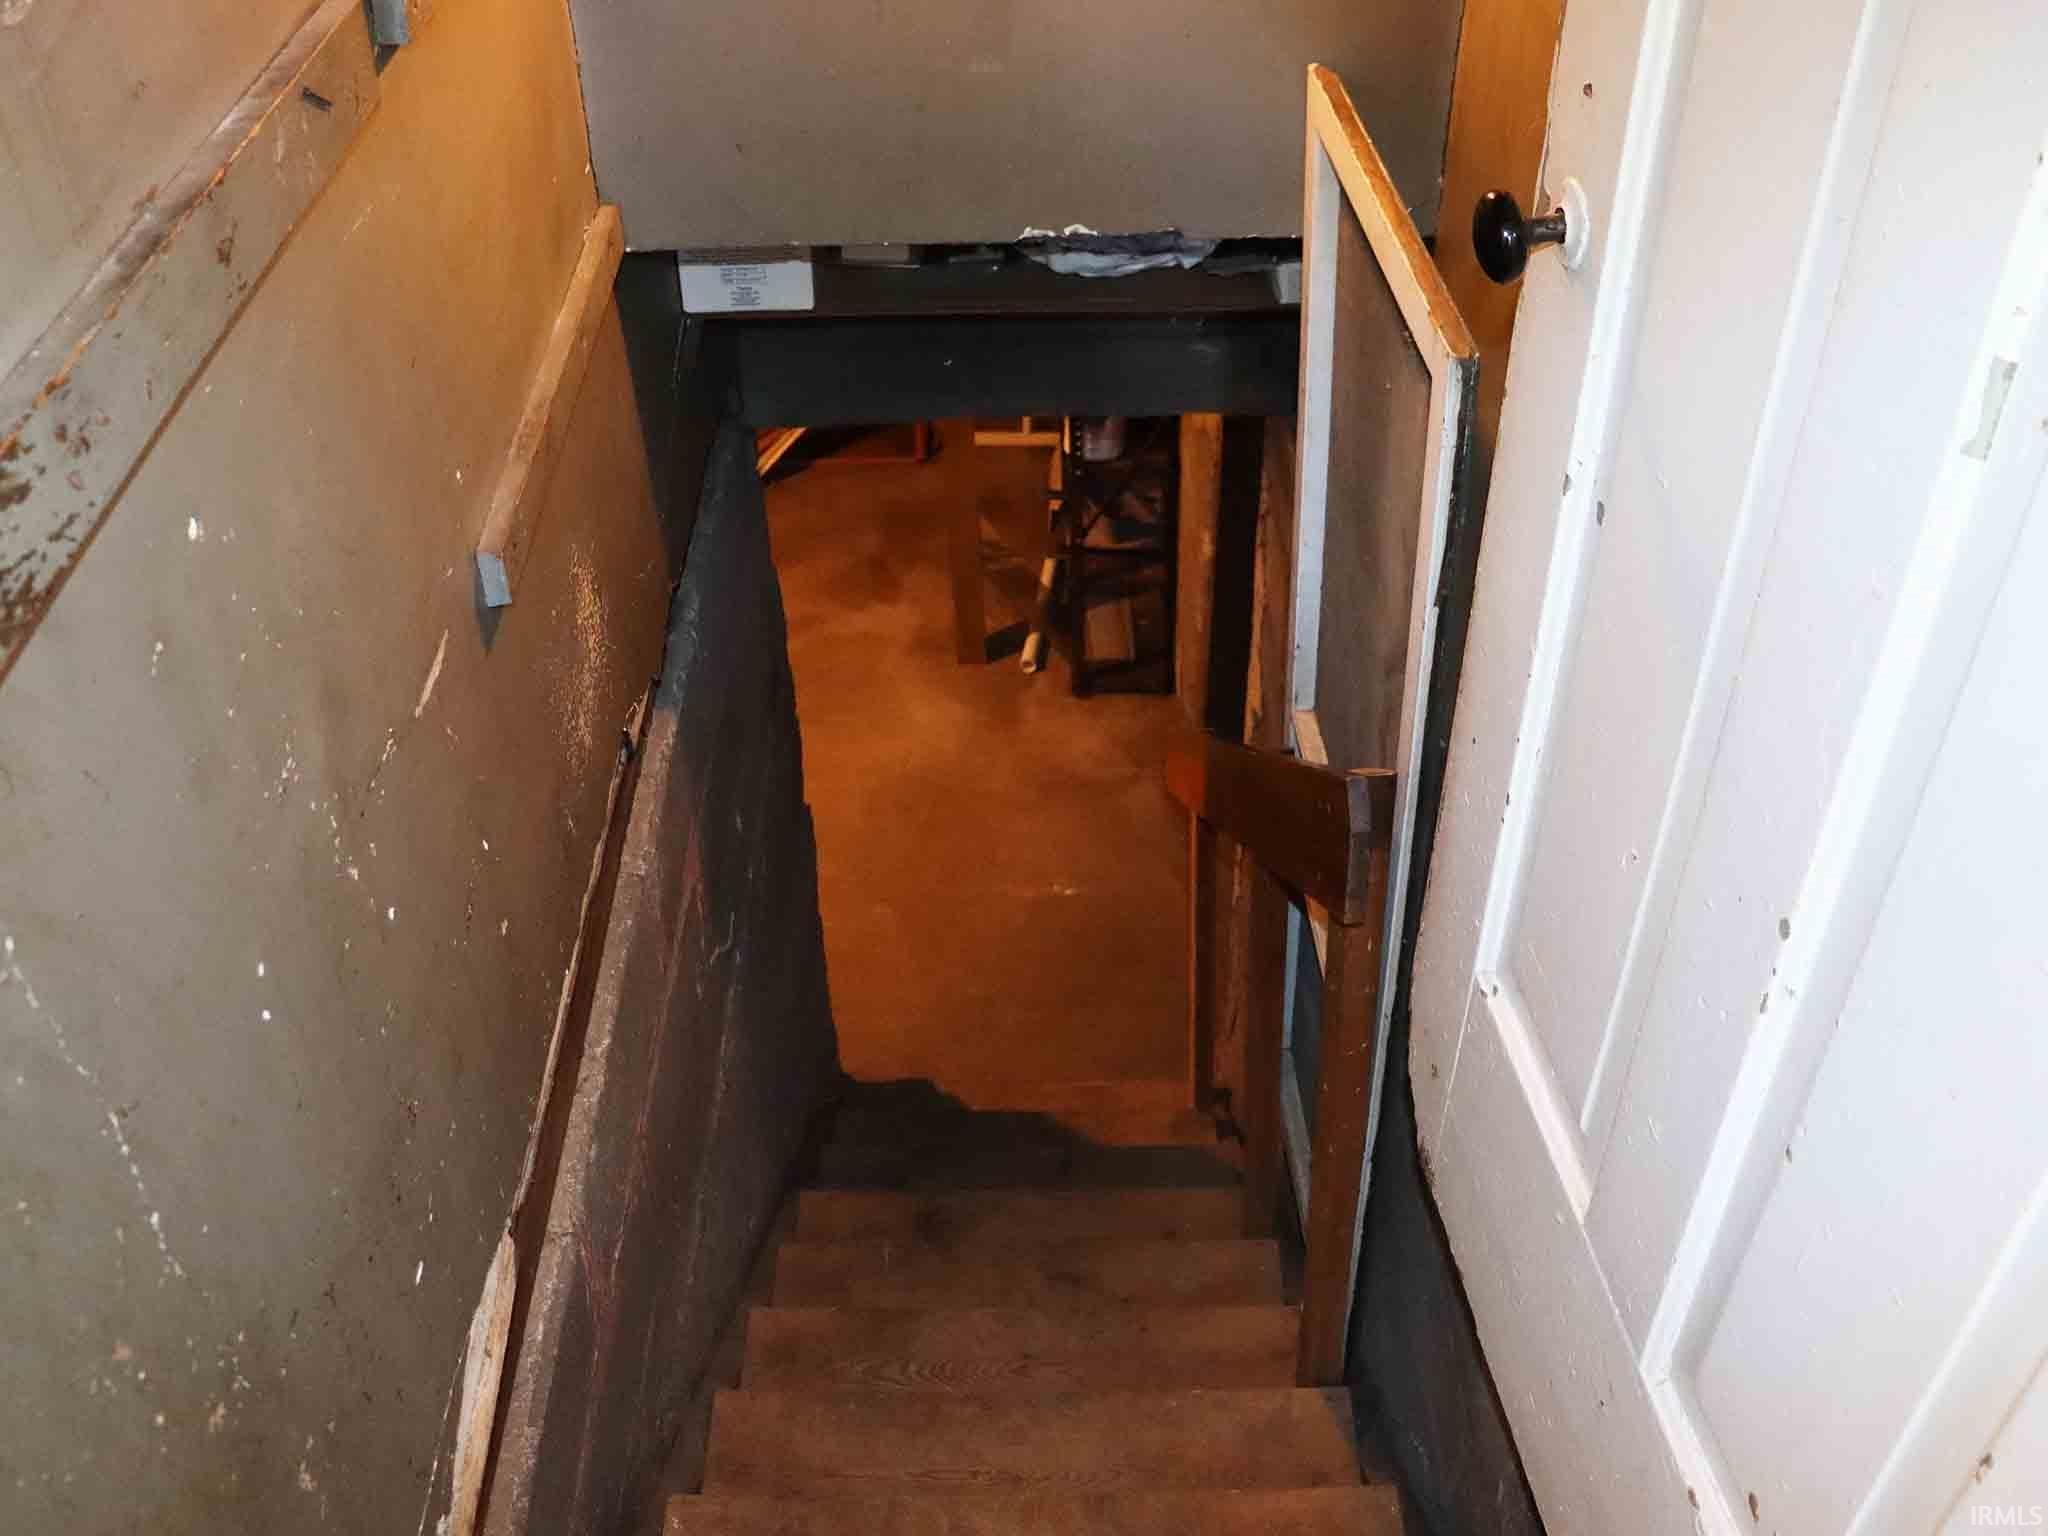 Stairway to basement.